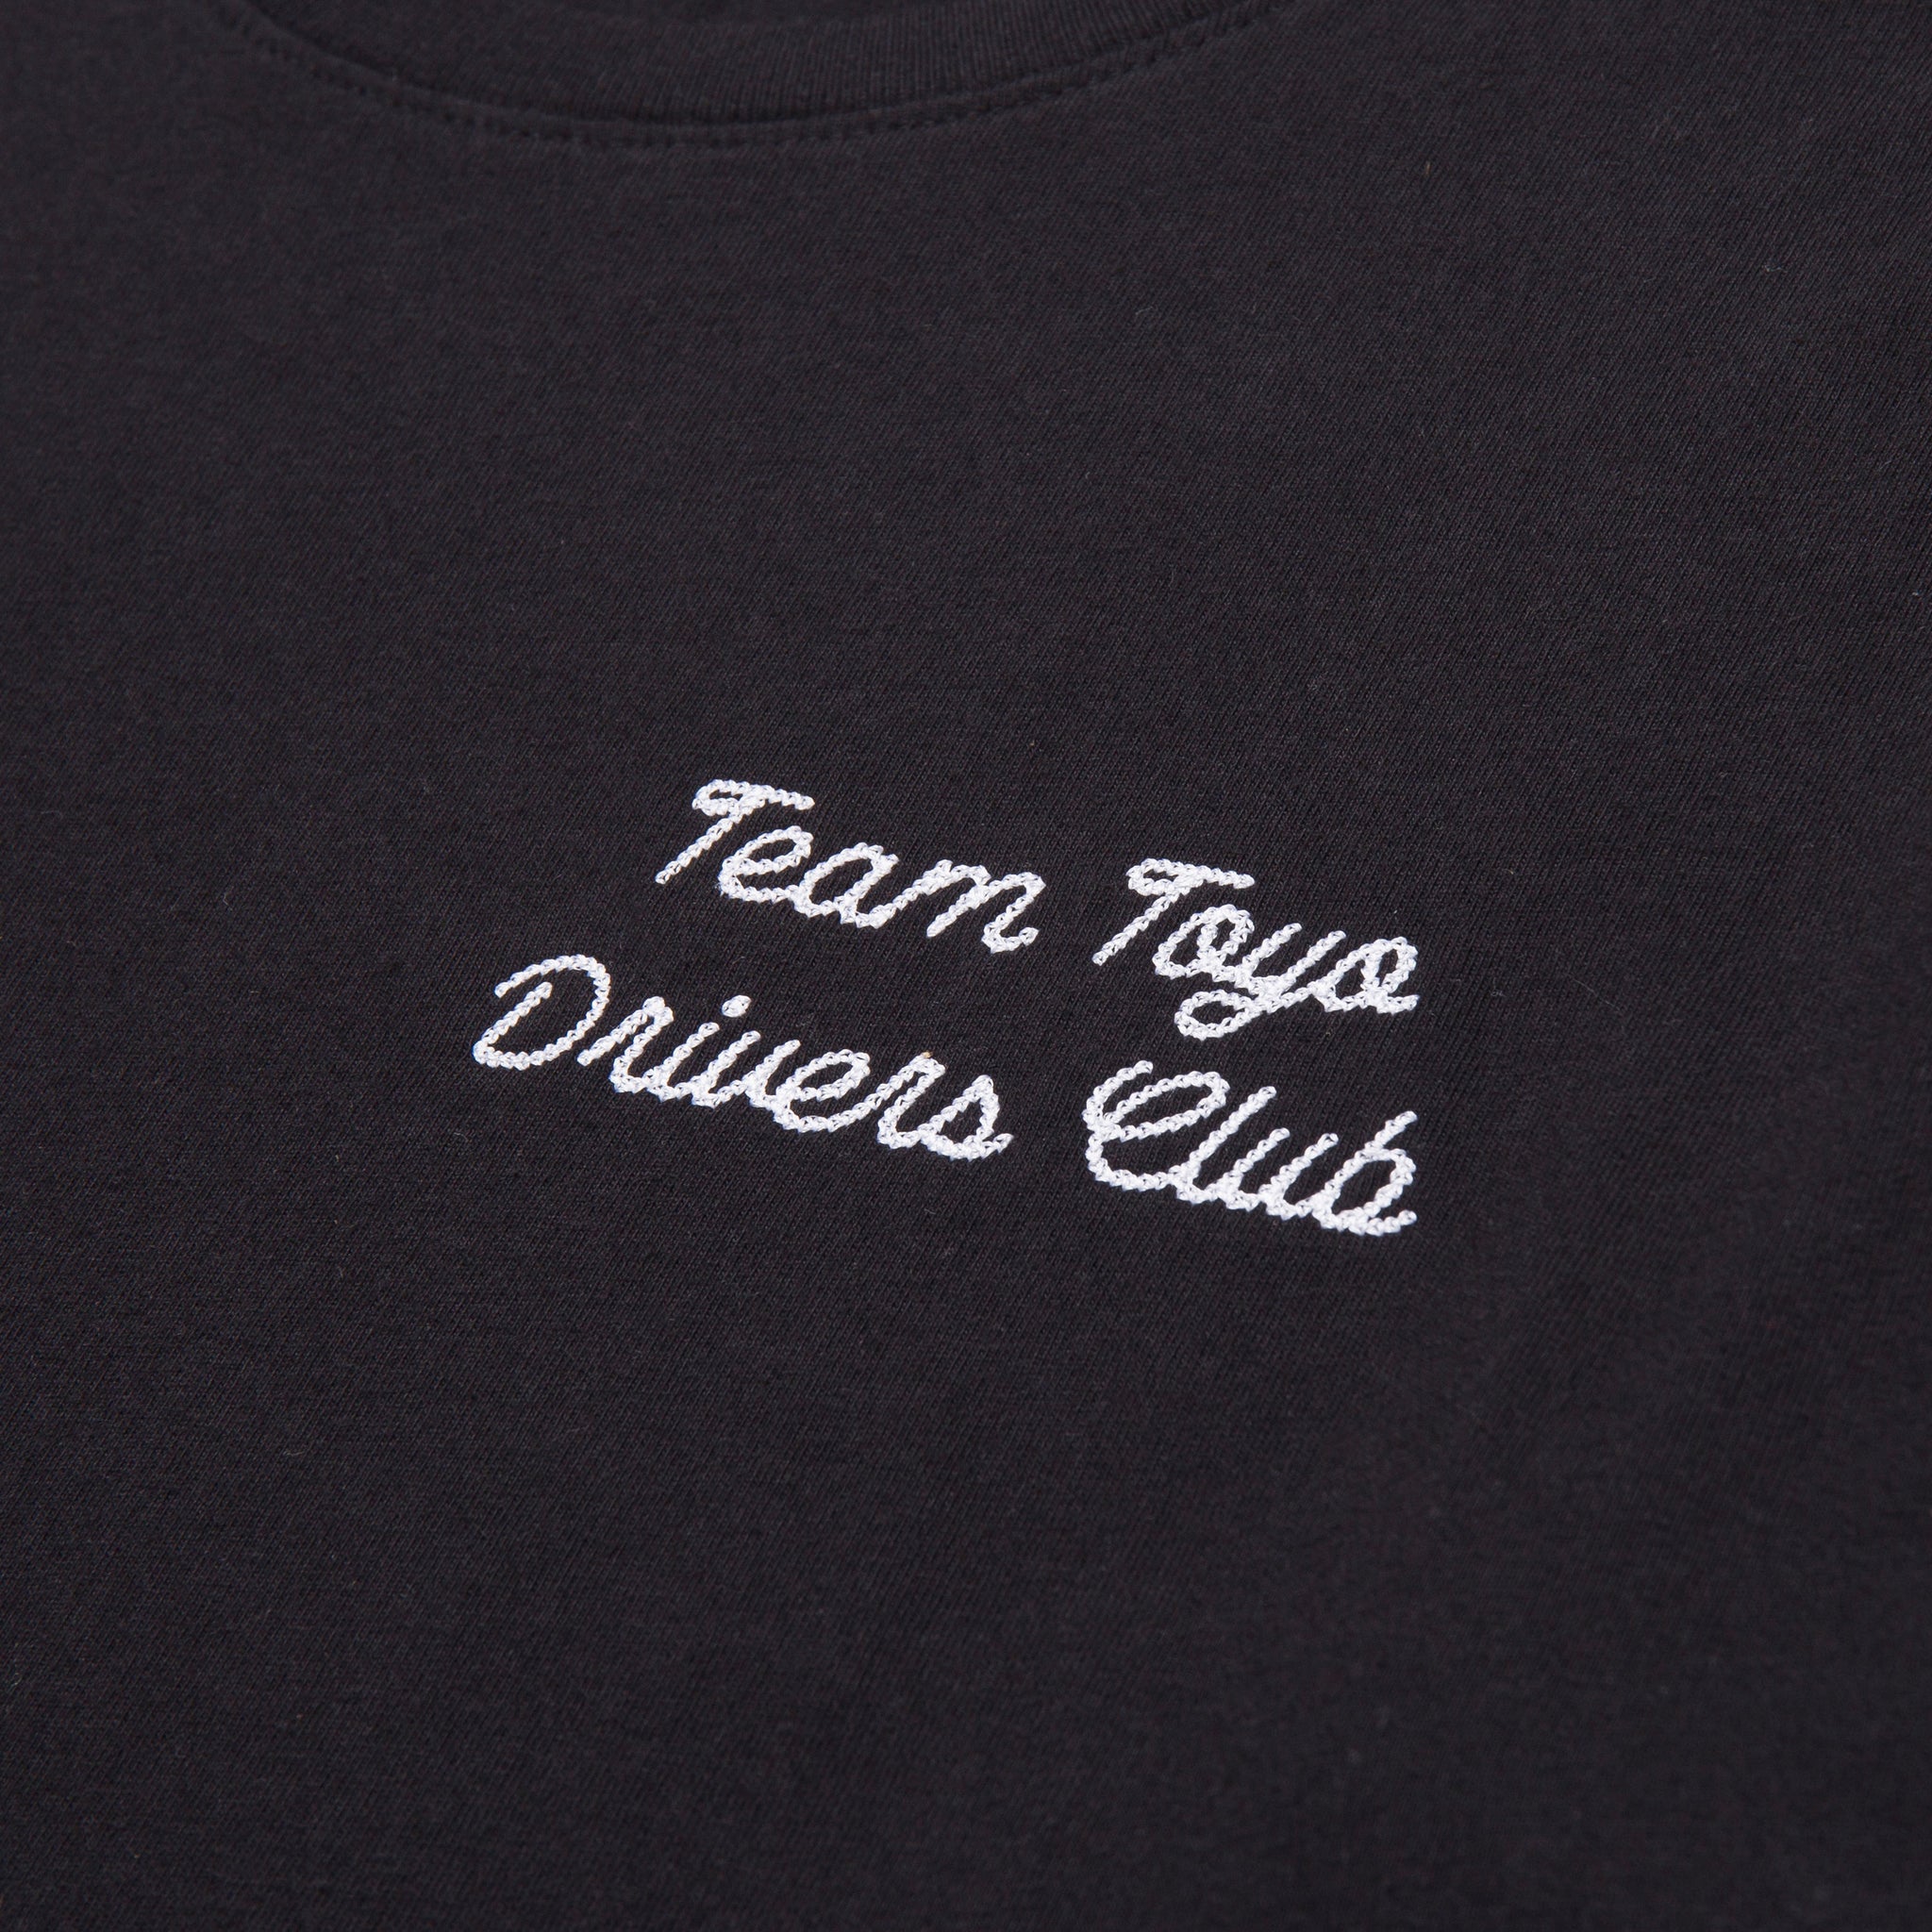 Team Toyo Drivers Club Tee Black